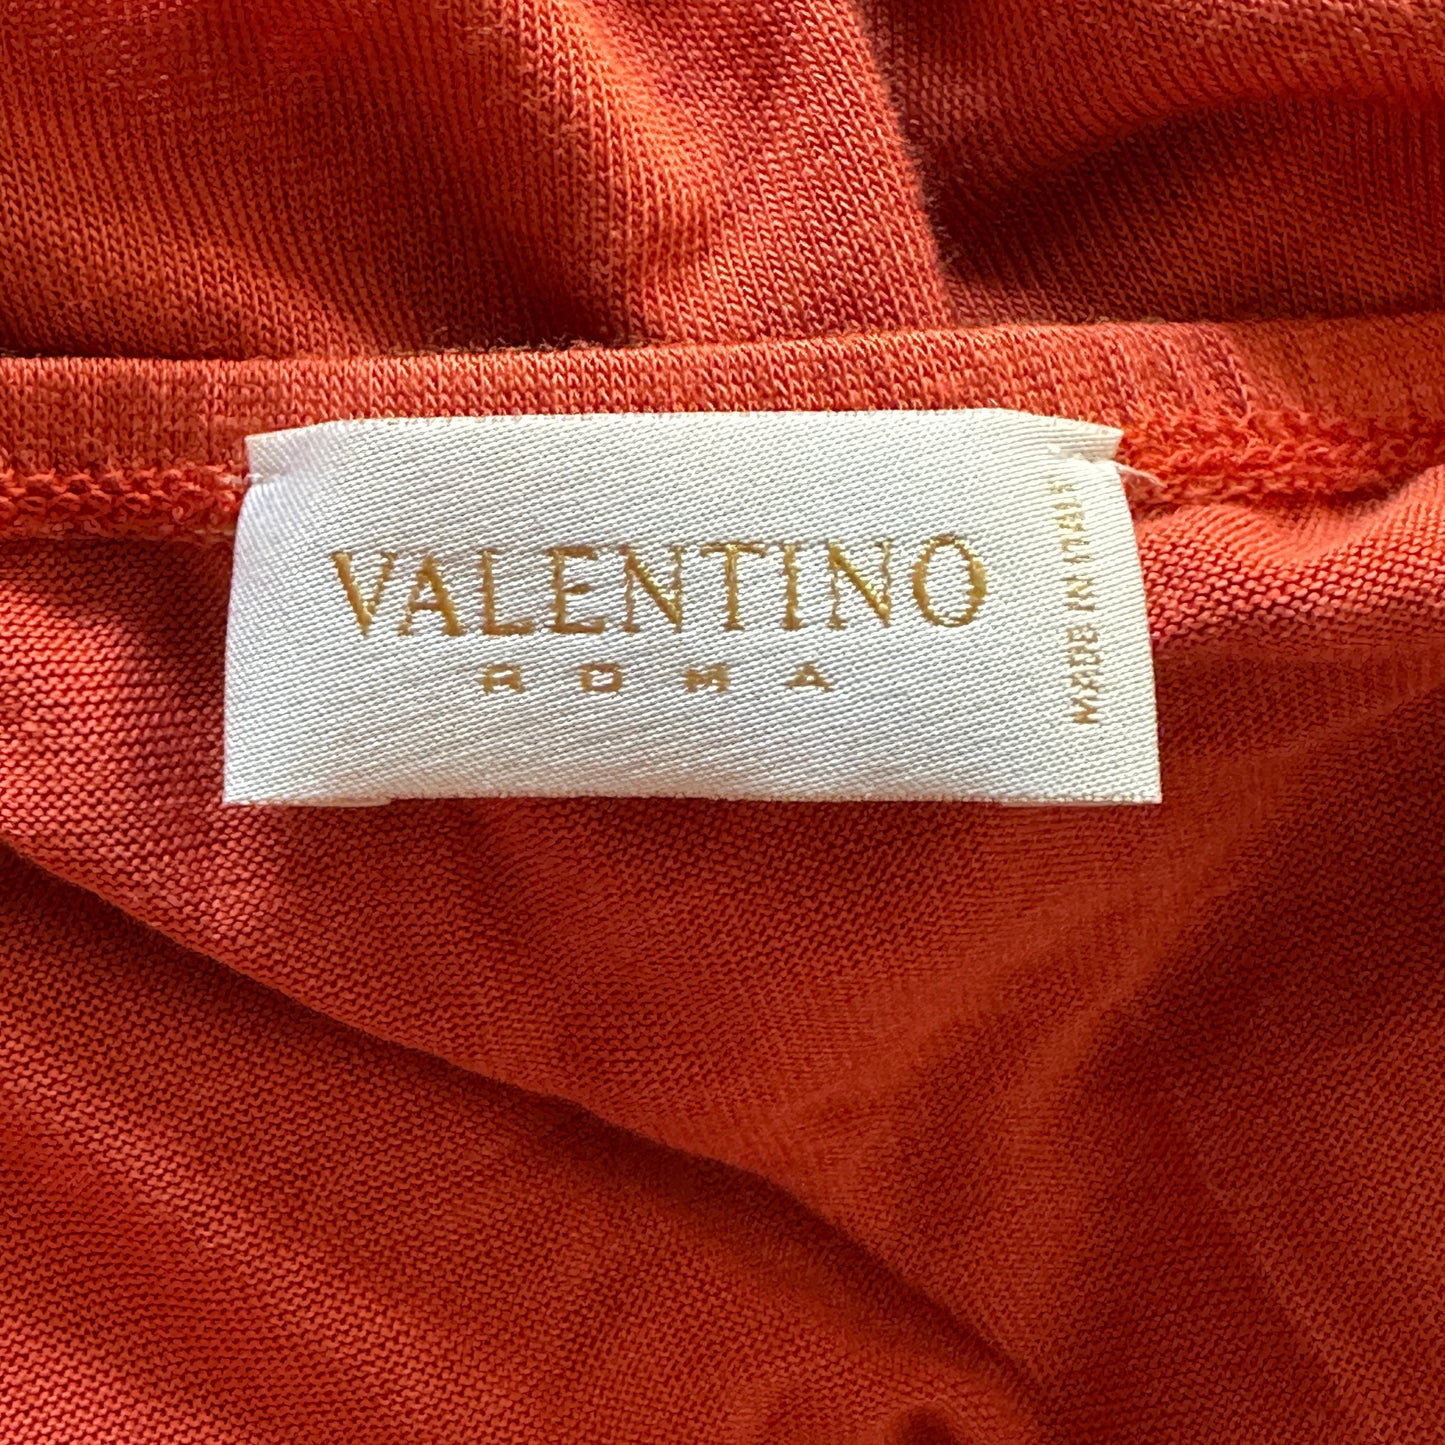 Valentino Embellished Butterfly Halter Neck Top